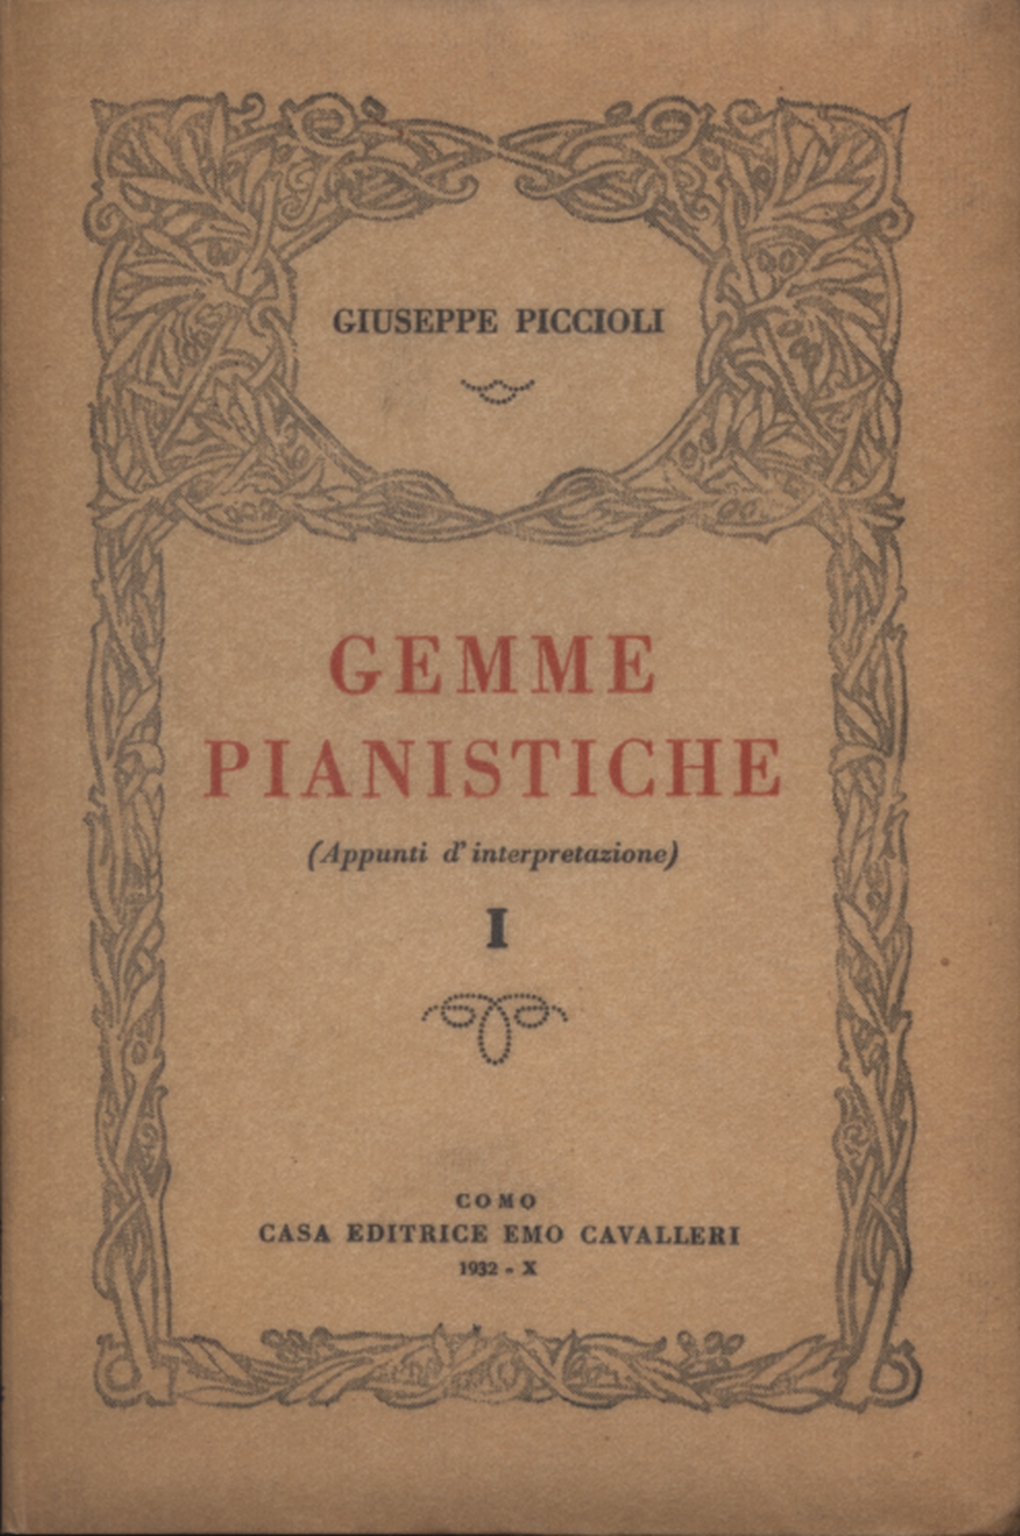 Gemme pianistiche I, Giuseppe Piccioli